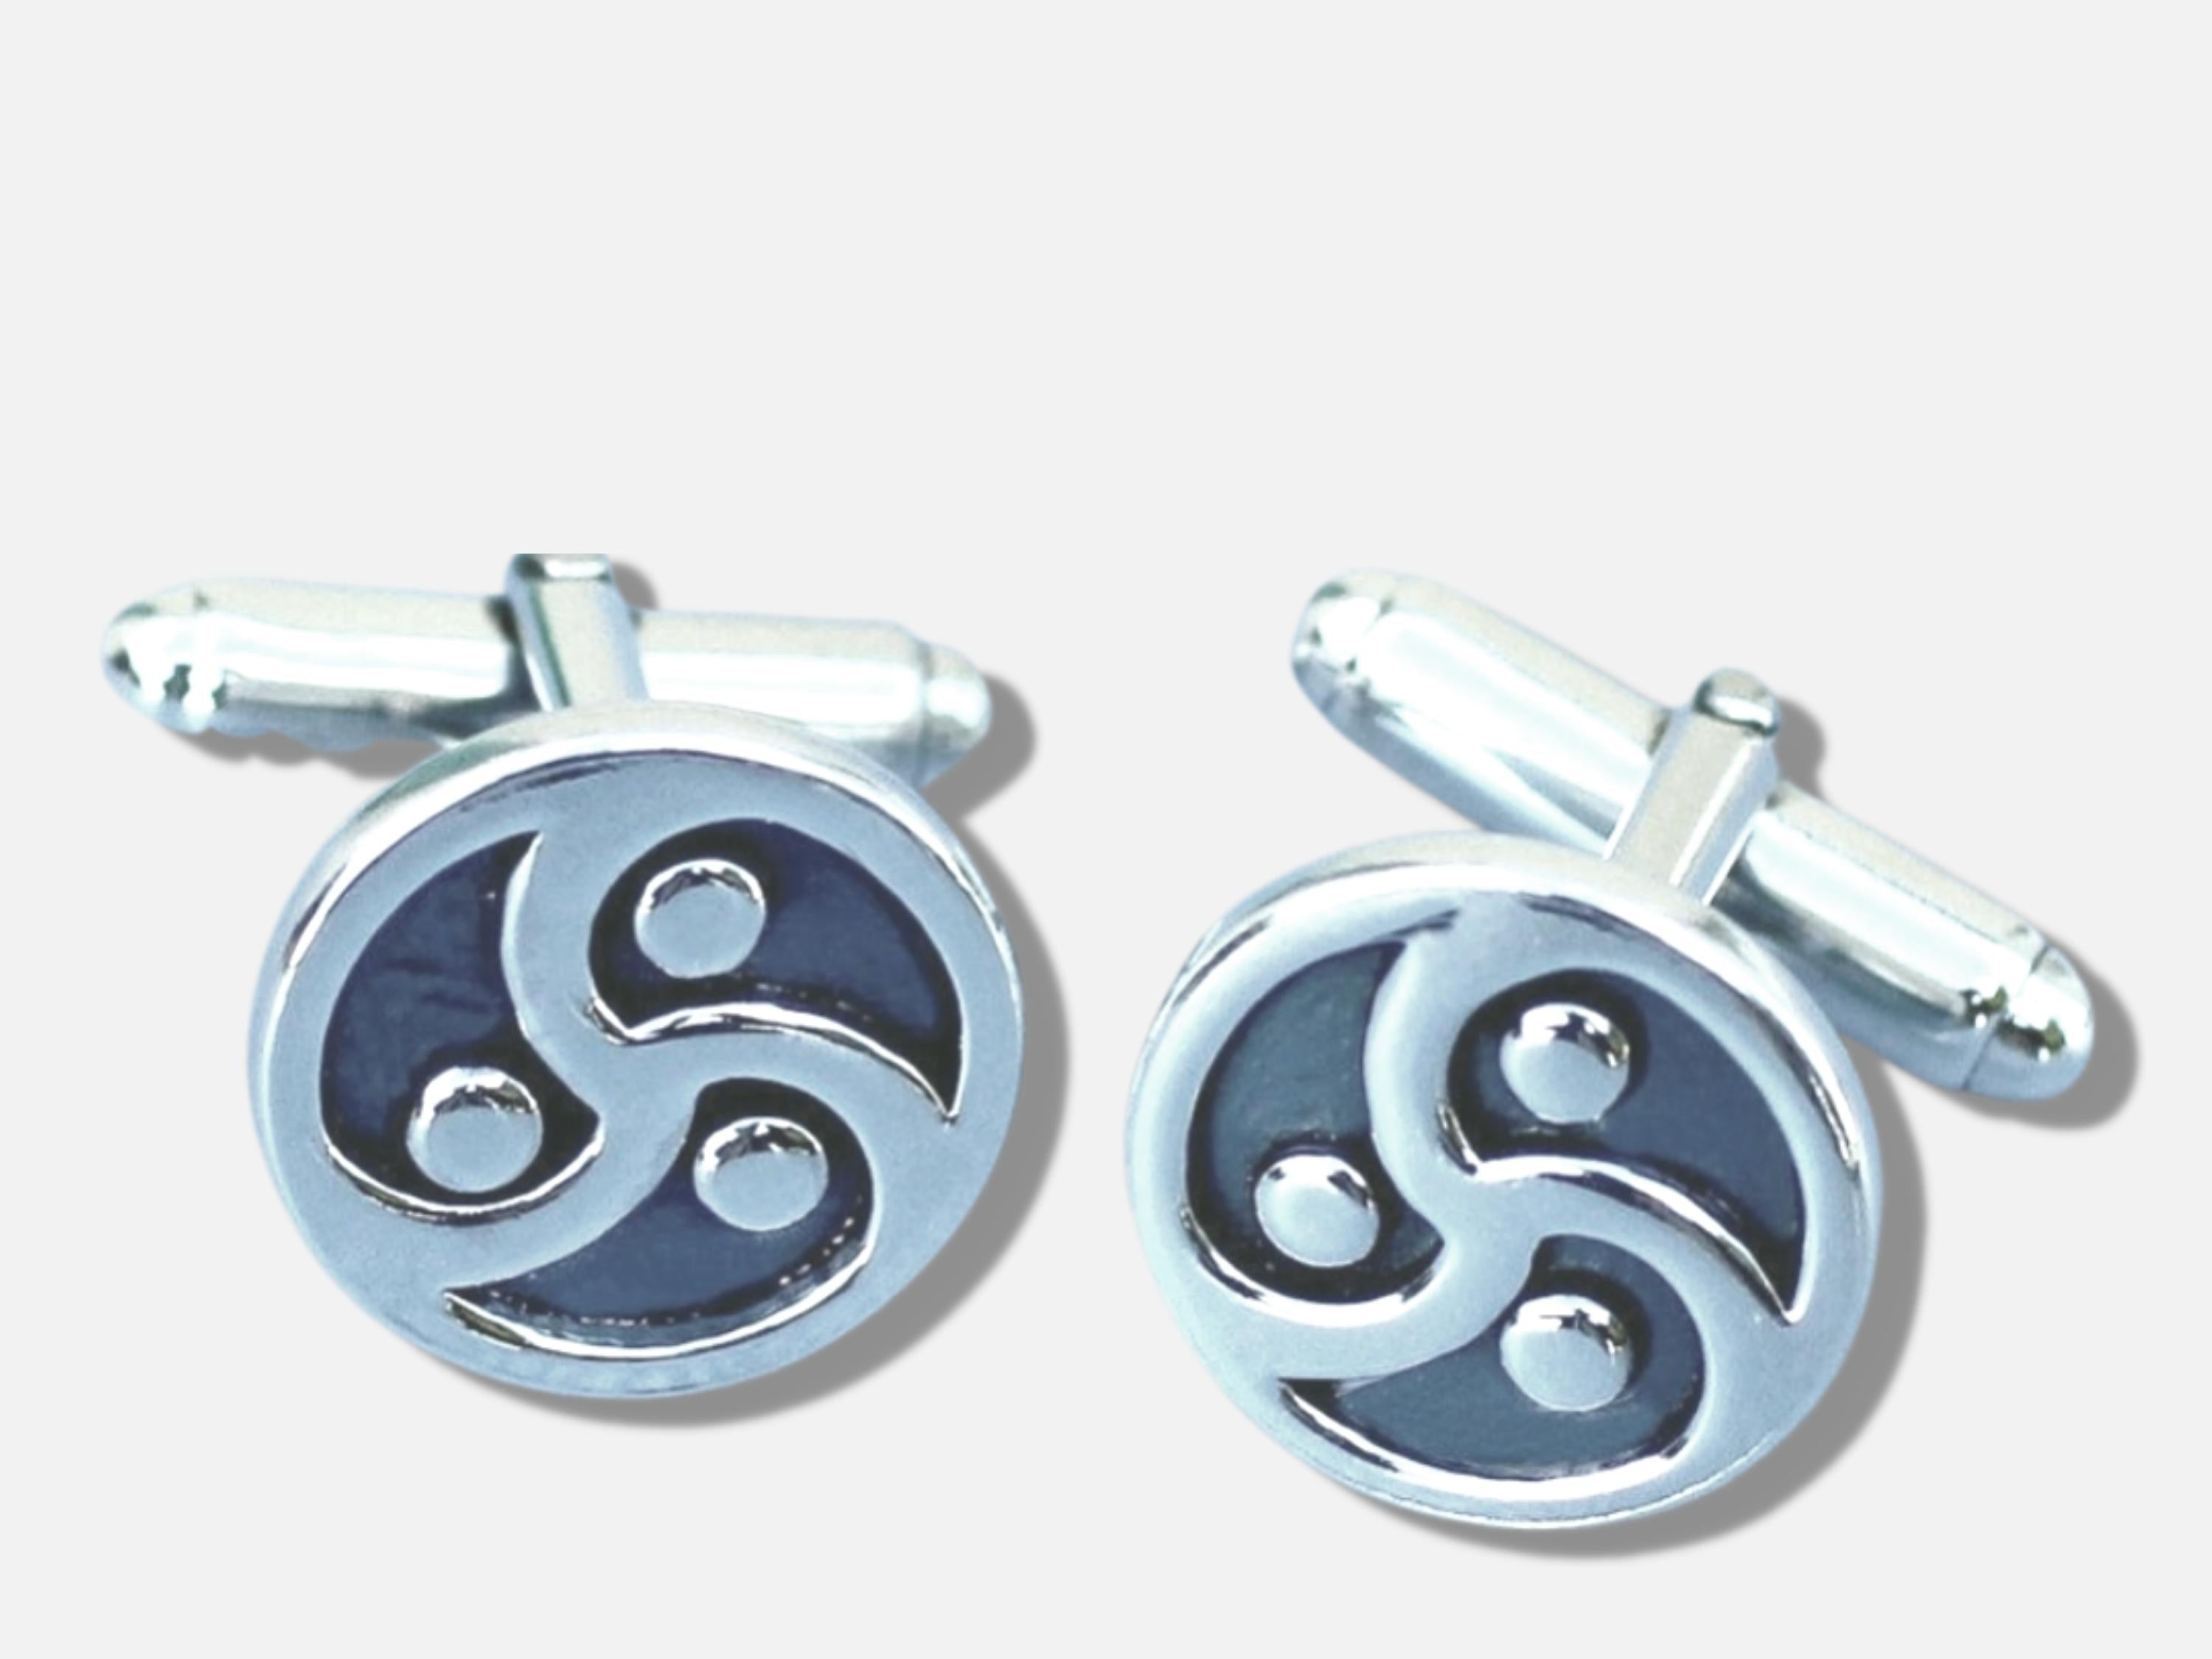 Handmade Sterling Silver BDSM Triskele Symbol Cuff Links - Unique and Durable Design